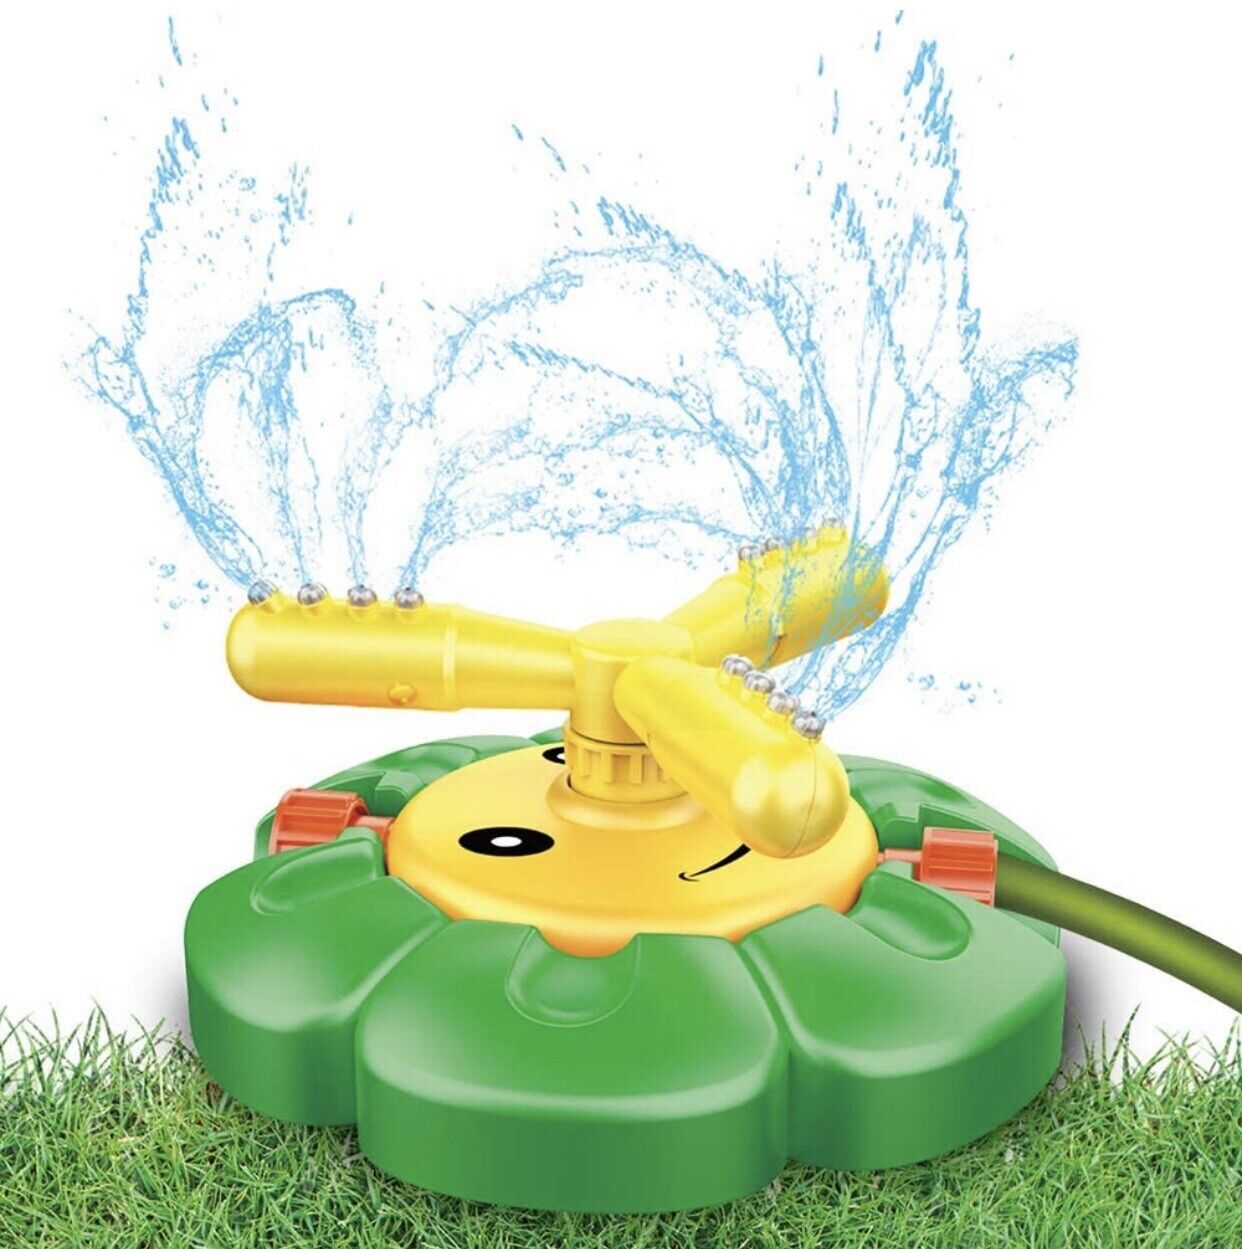 Outdoor Water Sprinkler For Kids